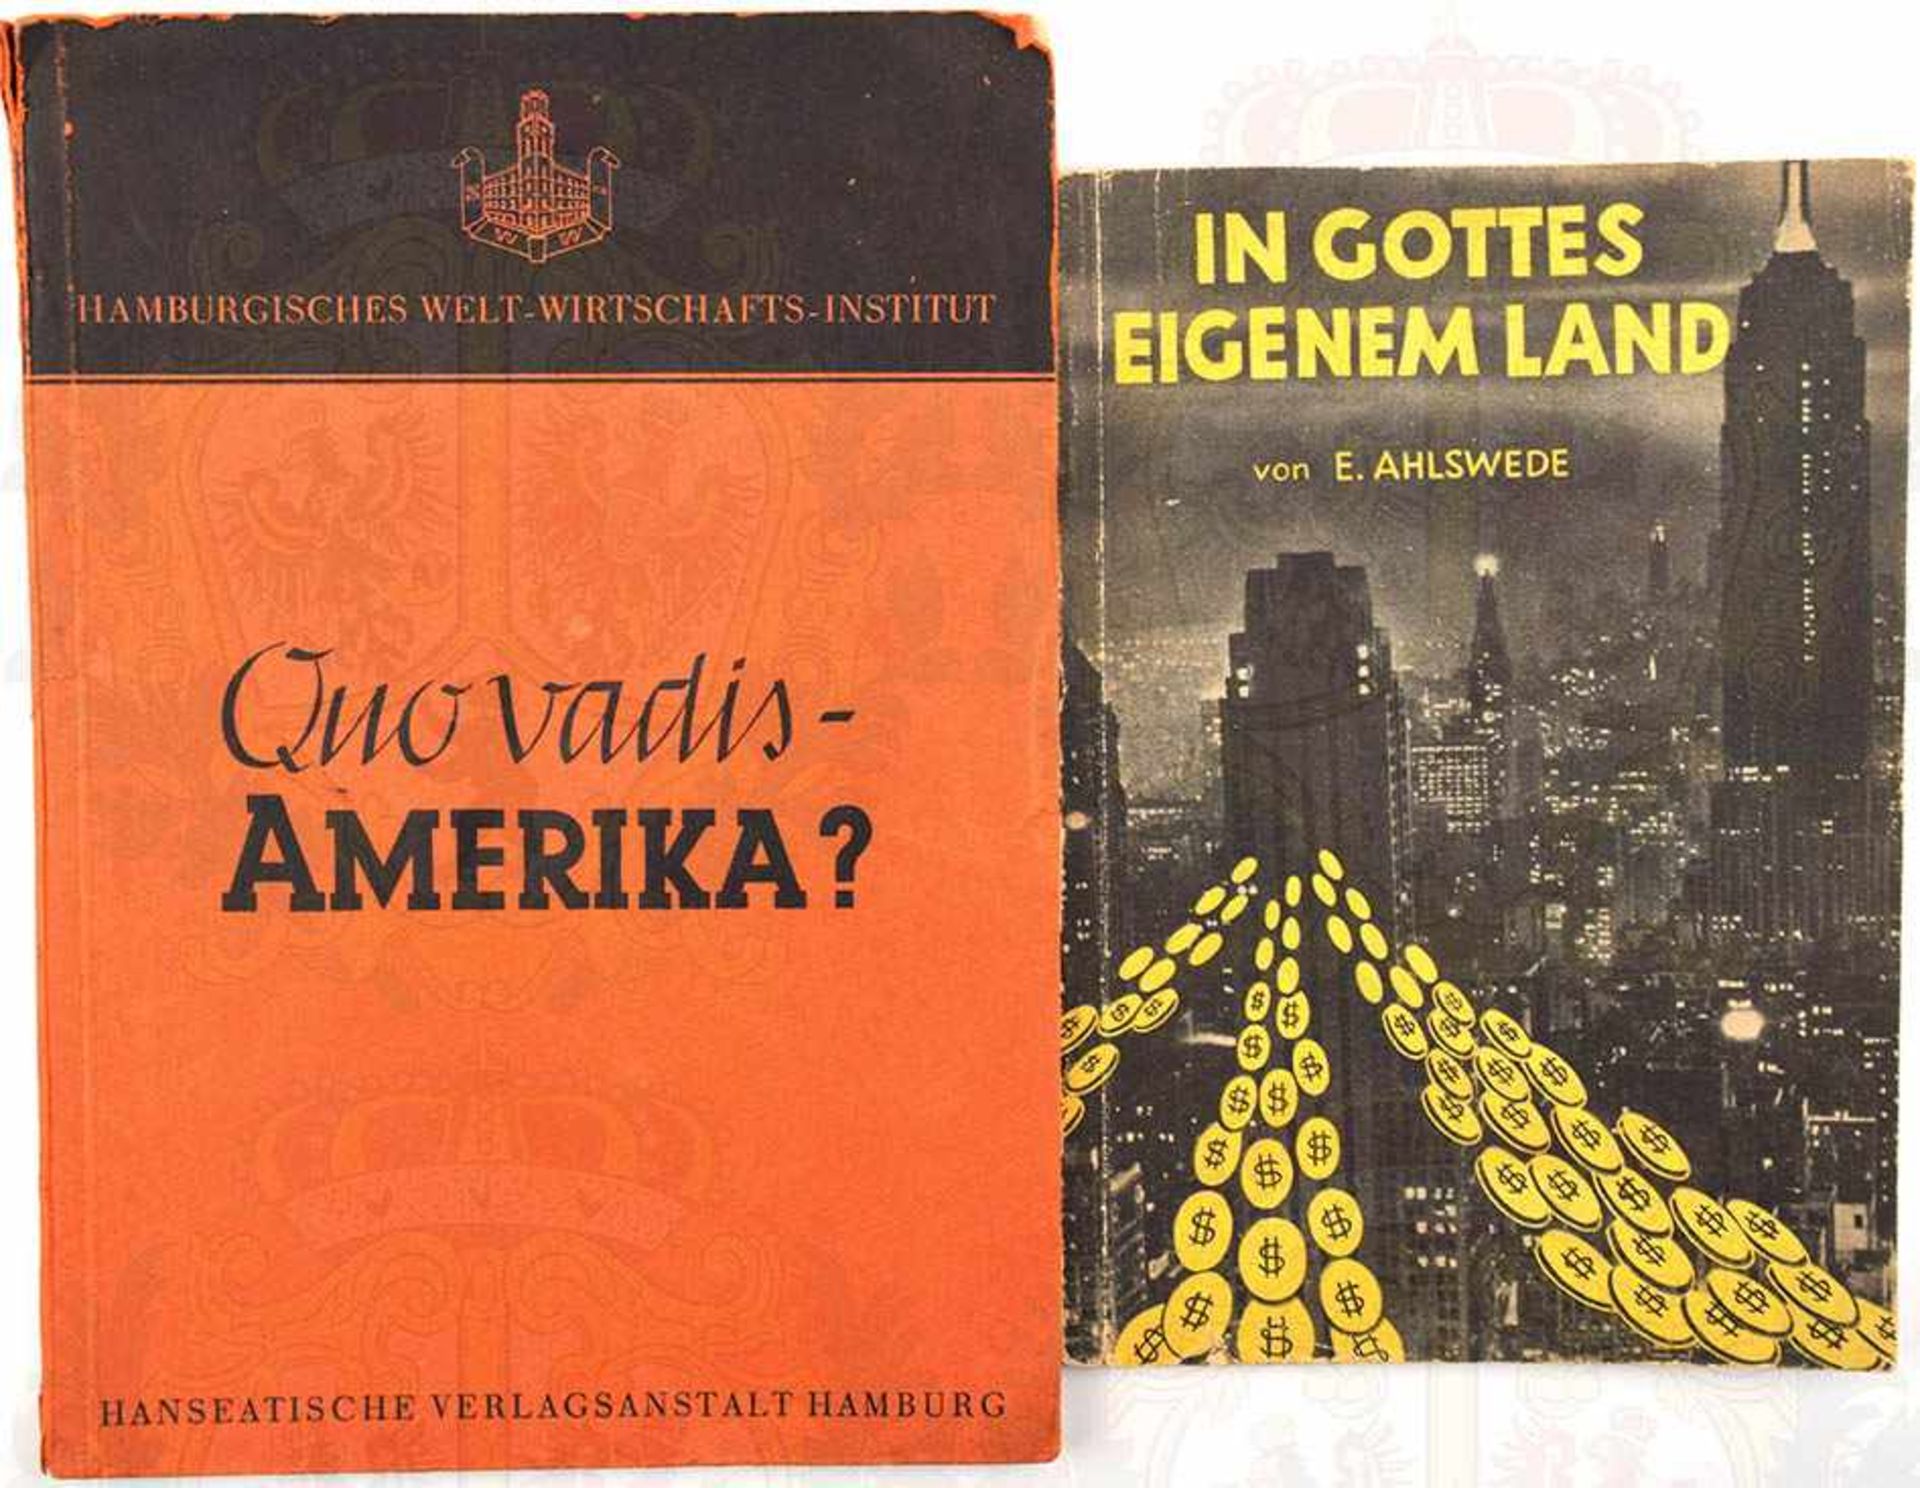 2 TITEL, Quo vadis - Amerika?; In Gottes eigenem Land, Hamburg u.a. 1941/1942, ges. 168 S., tls.